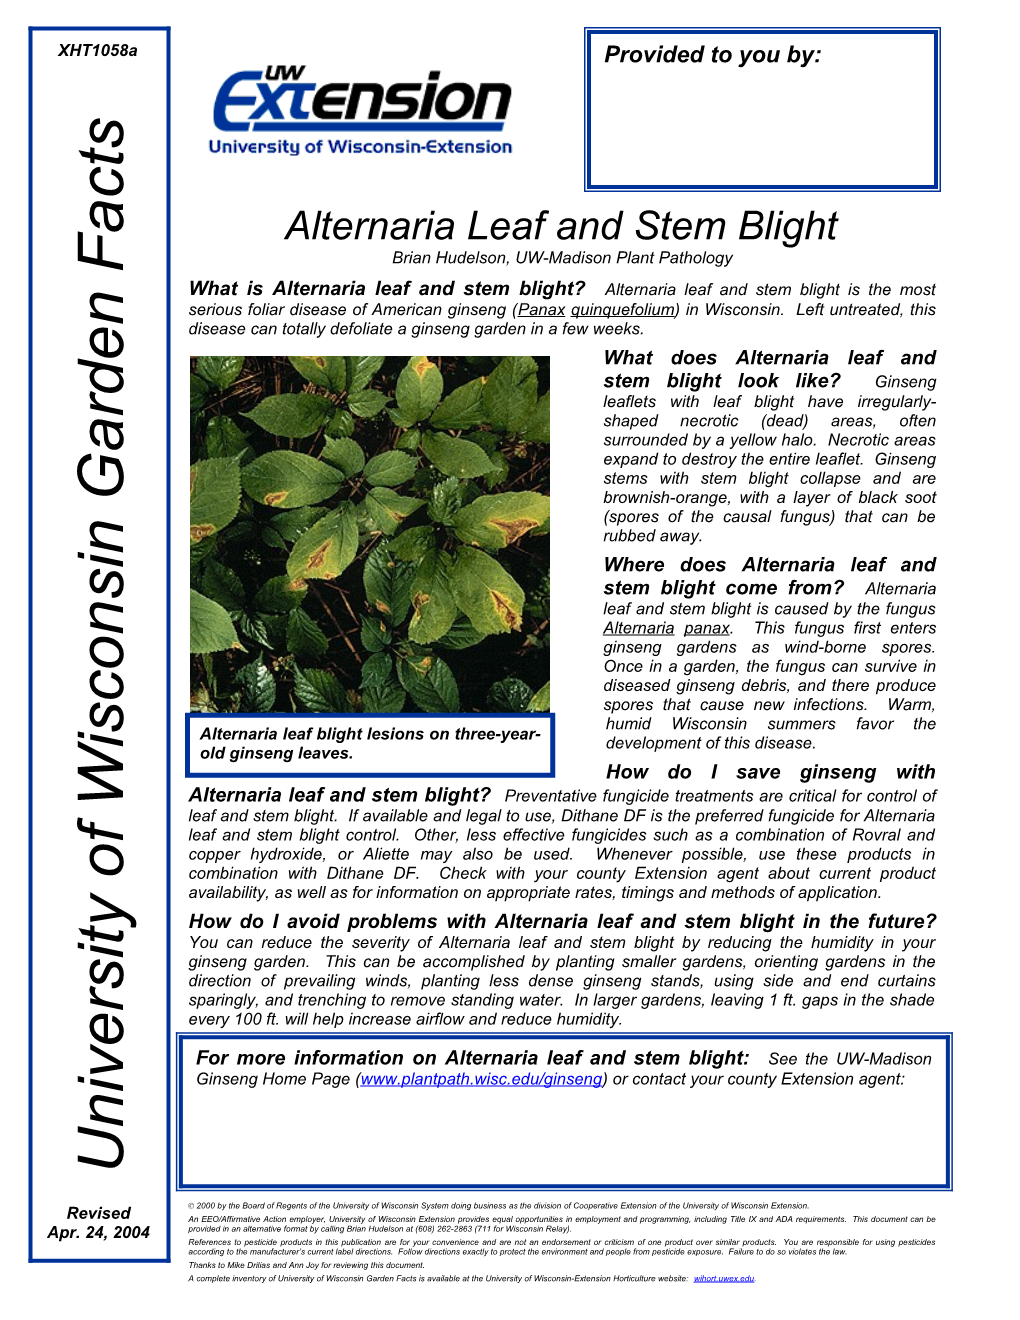 Alternaria Leaf and Stem Blight